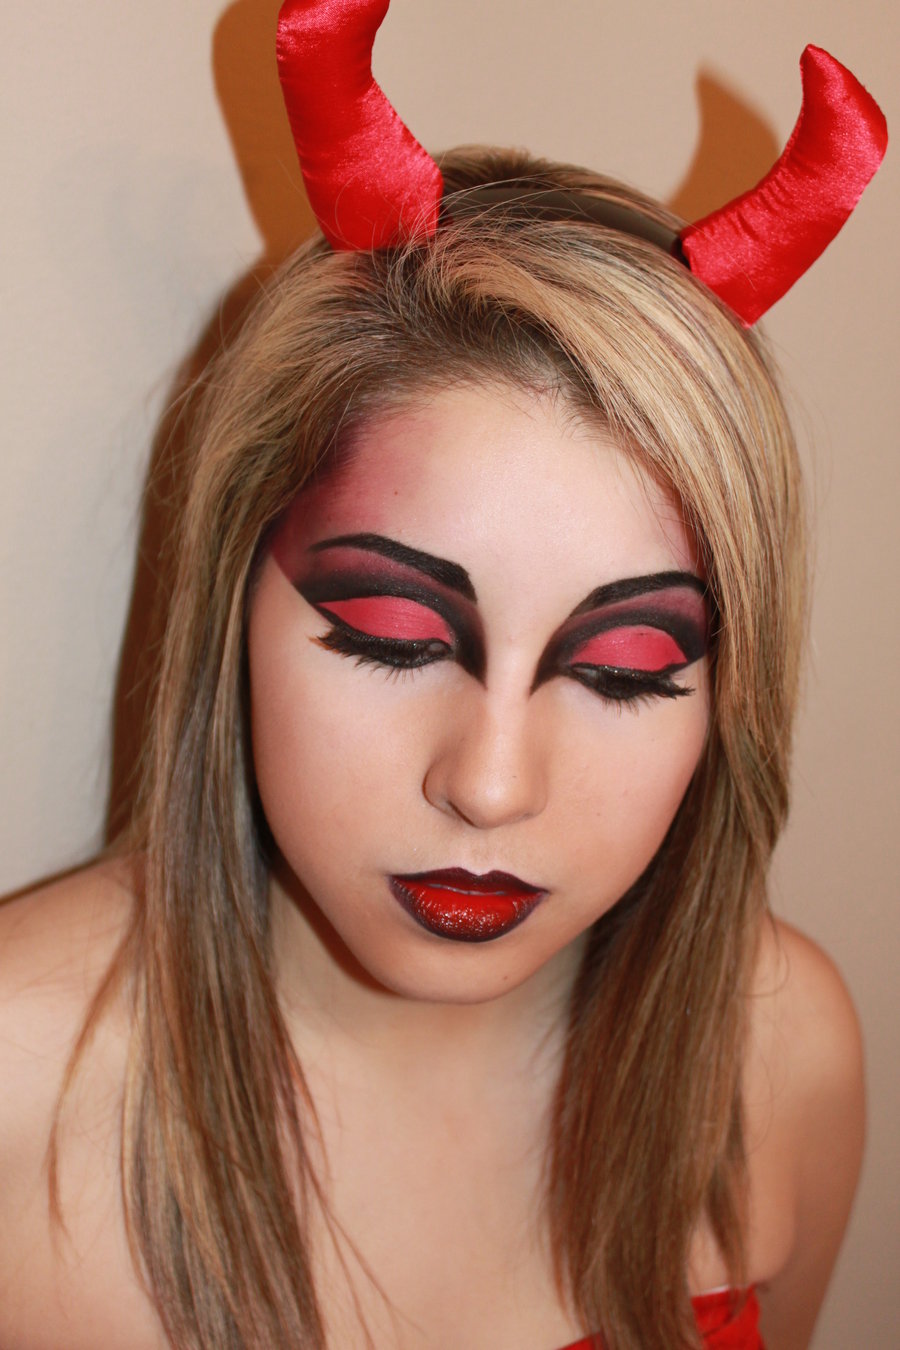 Naughty Girly Halloween Makeup